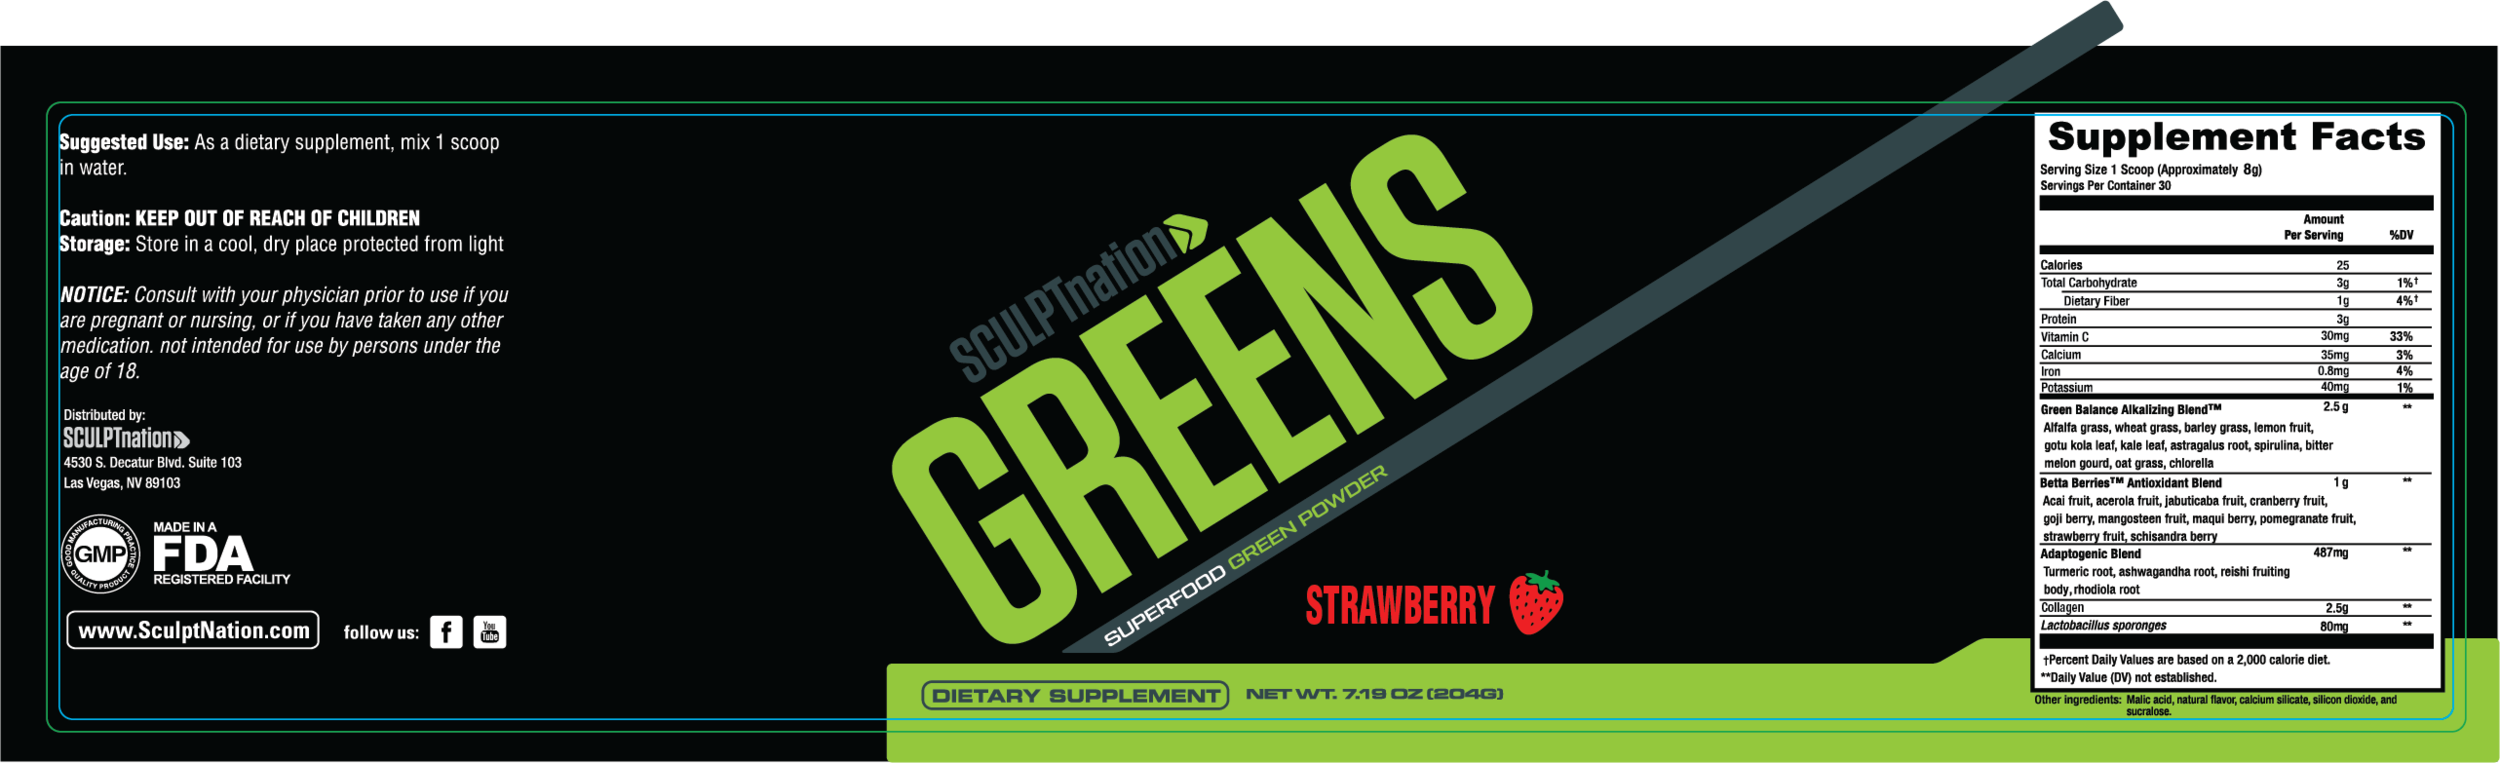 greens_strawberry_v1.png